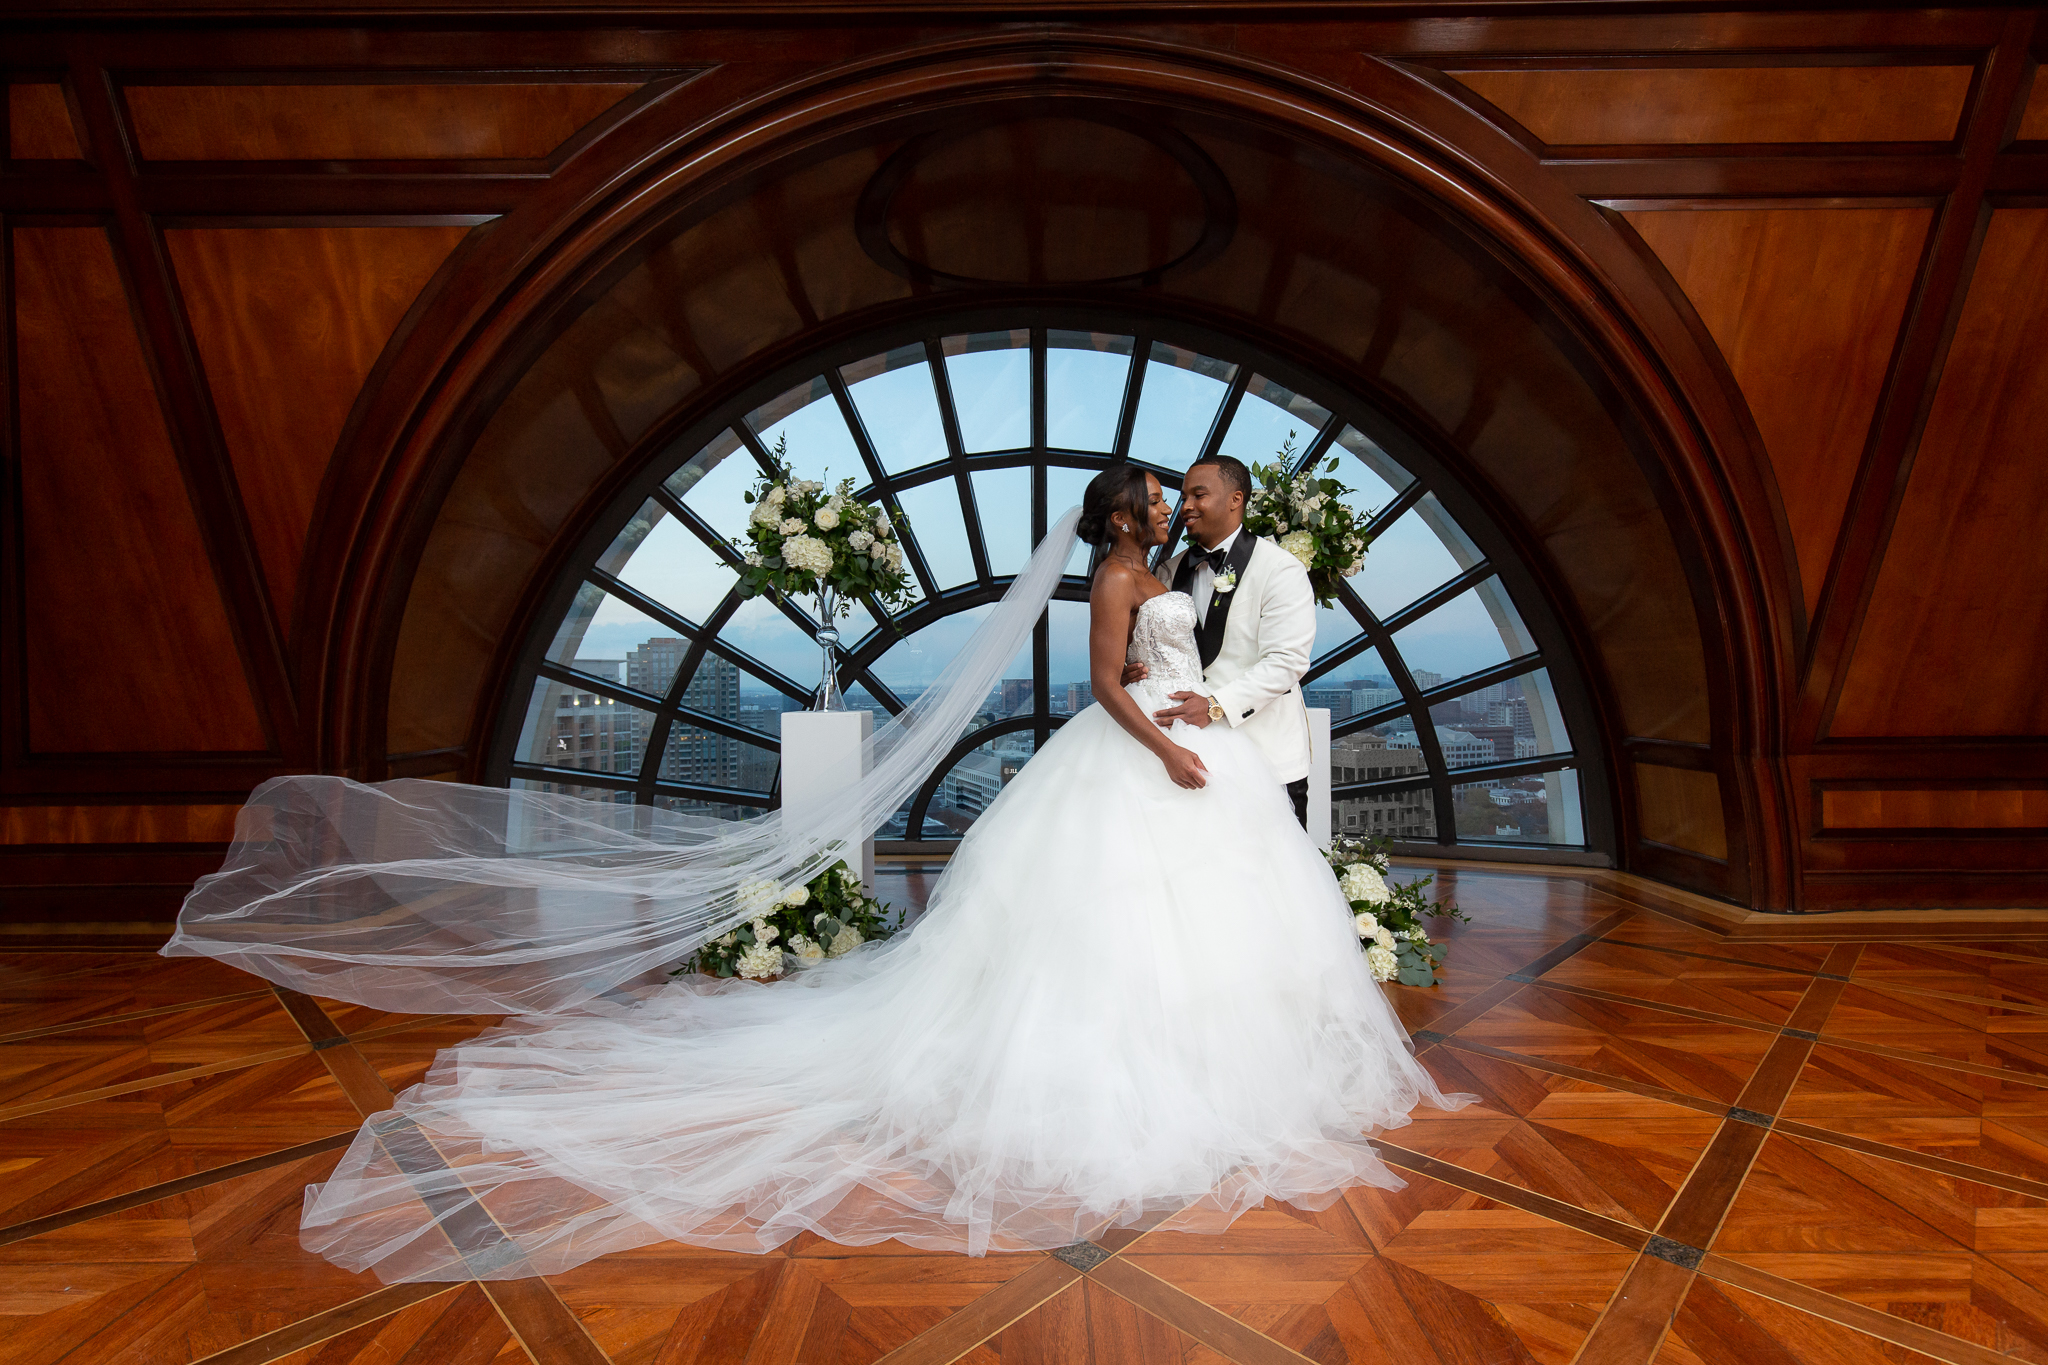 Crescent Court Hotel wedding venue in Dallas tx with bride and groom